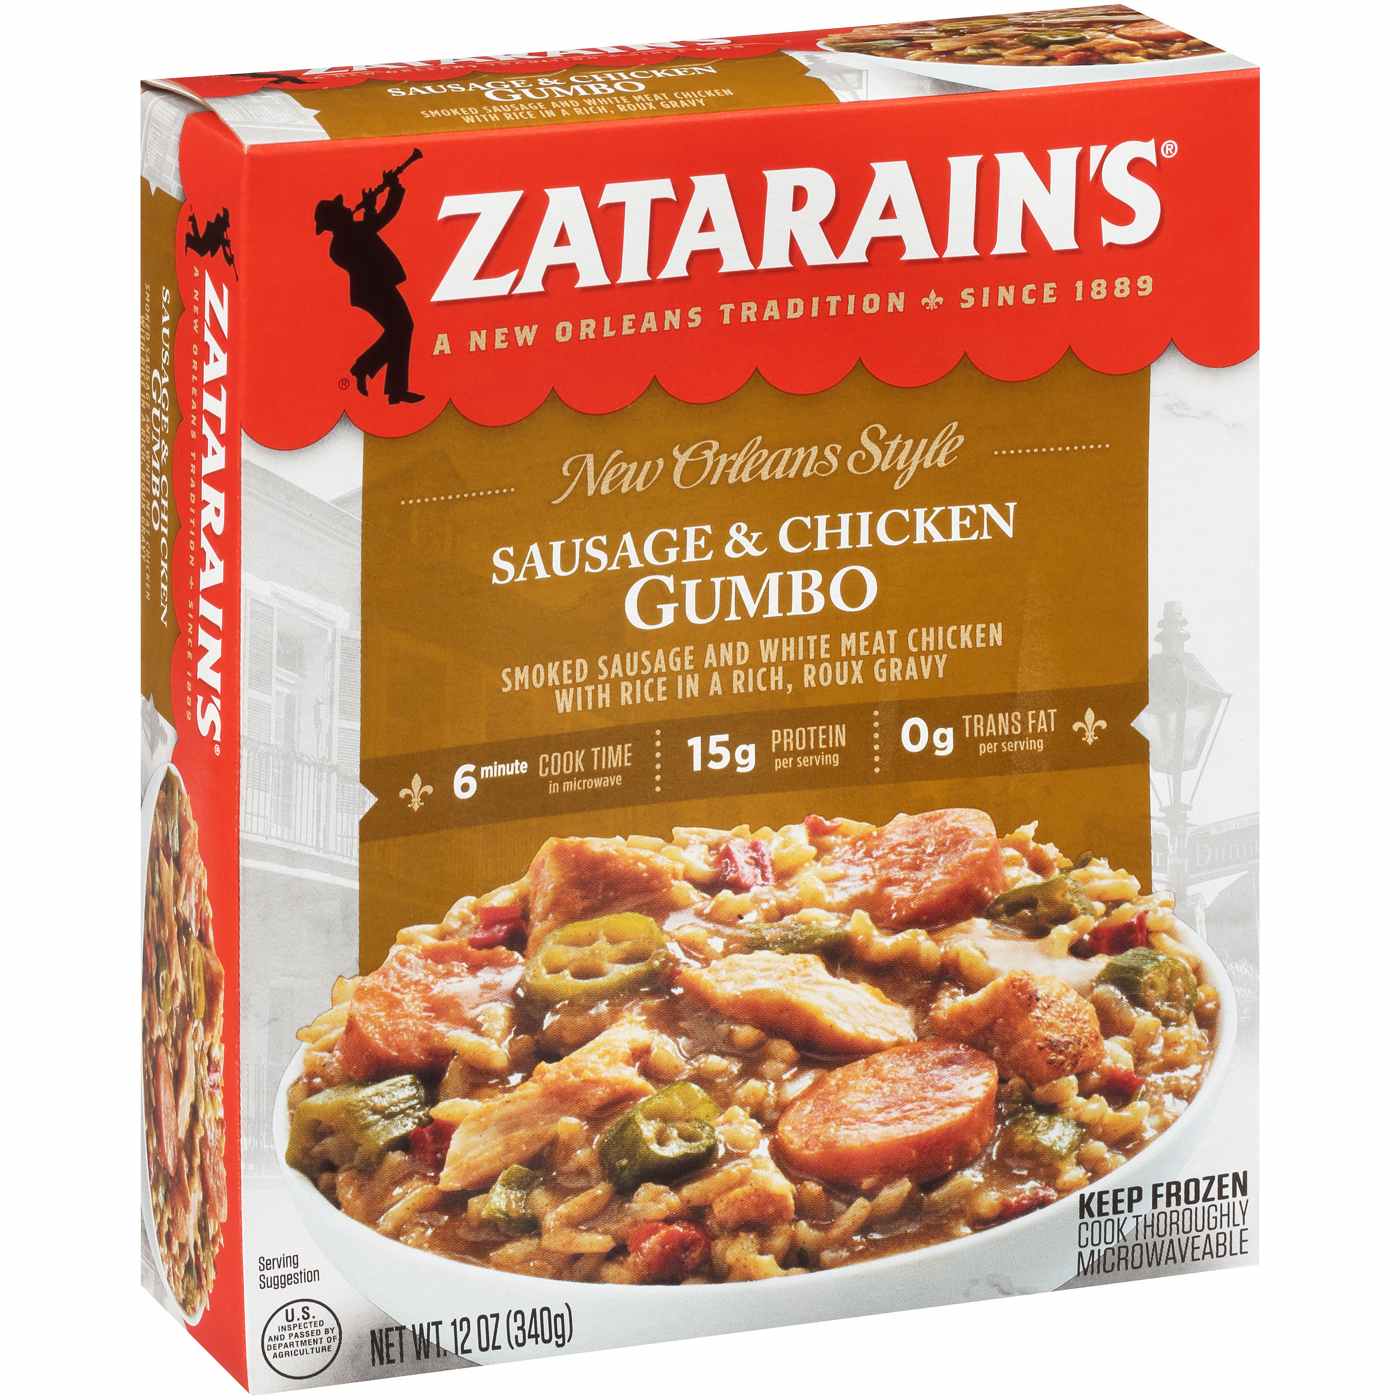 Zatarain's Sausage & Chicken Gumbo Frozen Meal; image 1 of 3